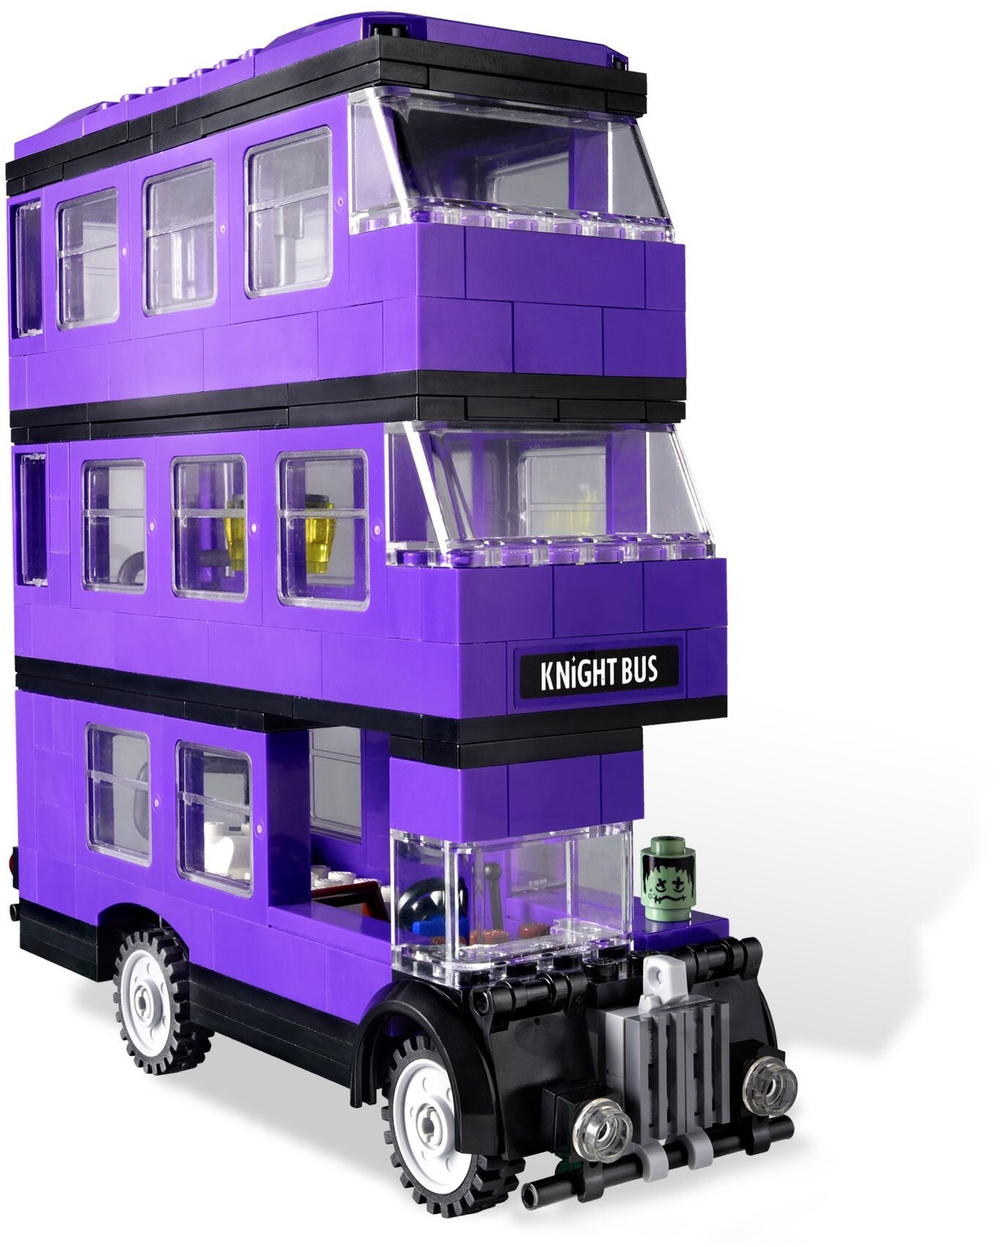 Конструктор LEGO 4866 Рыцарский автобус